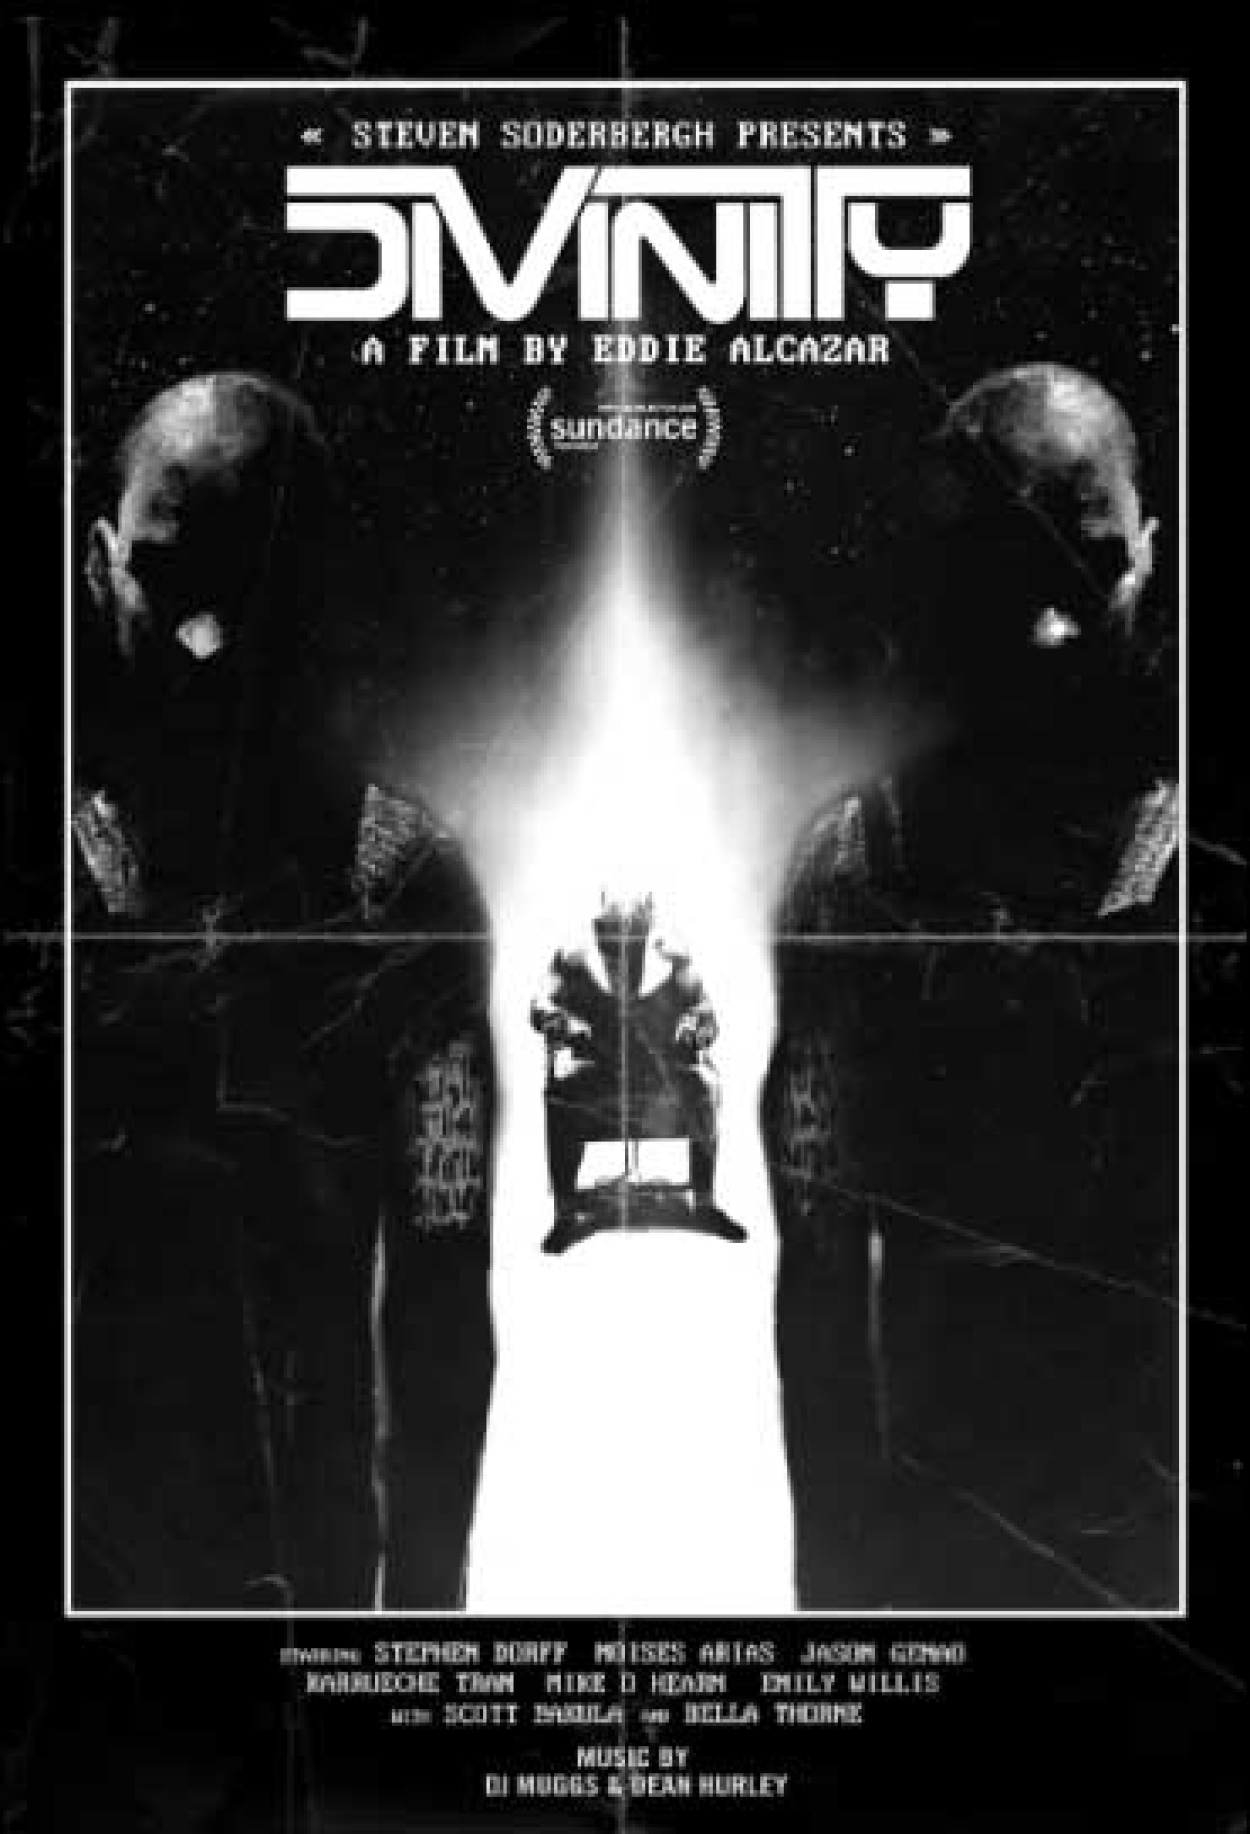 John Wick: Capítulo 4 (Filme), Trailer, Sinopse e Curiosidades - Cinema10